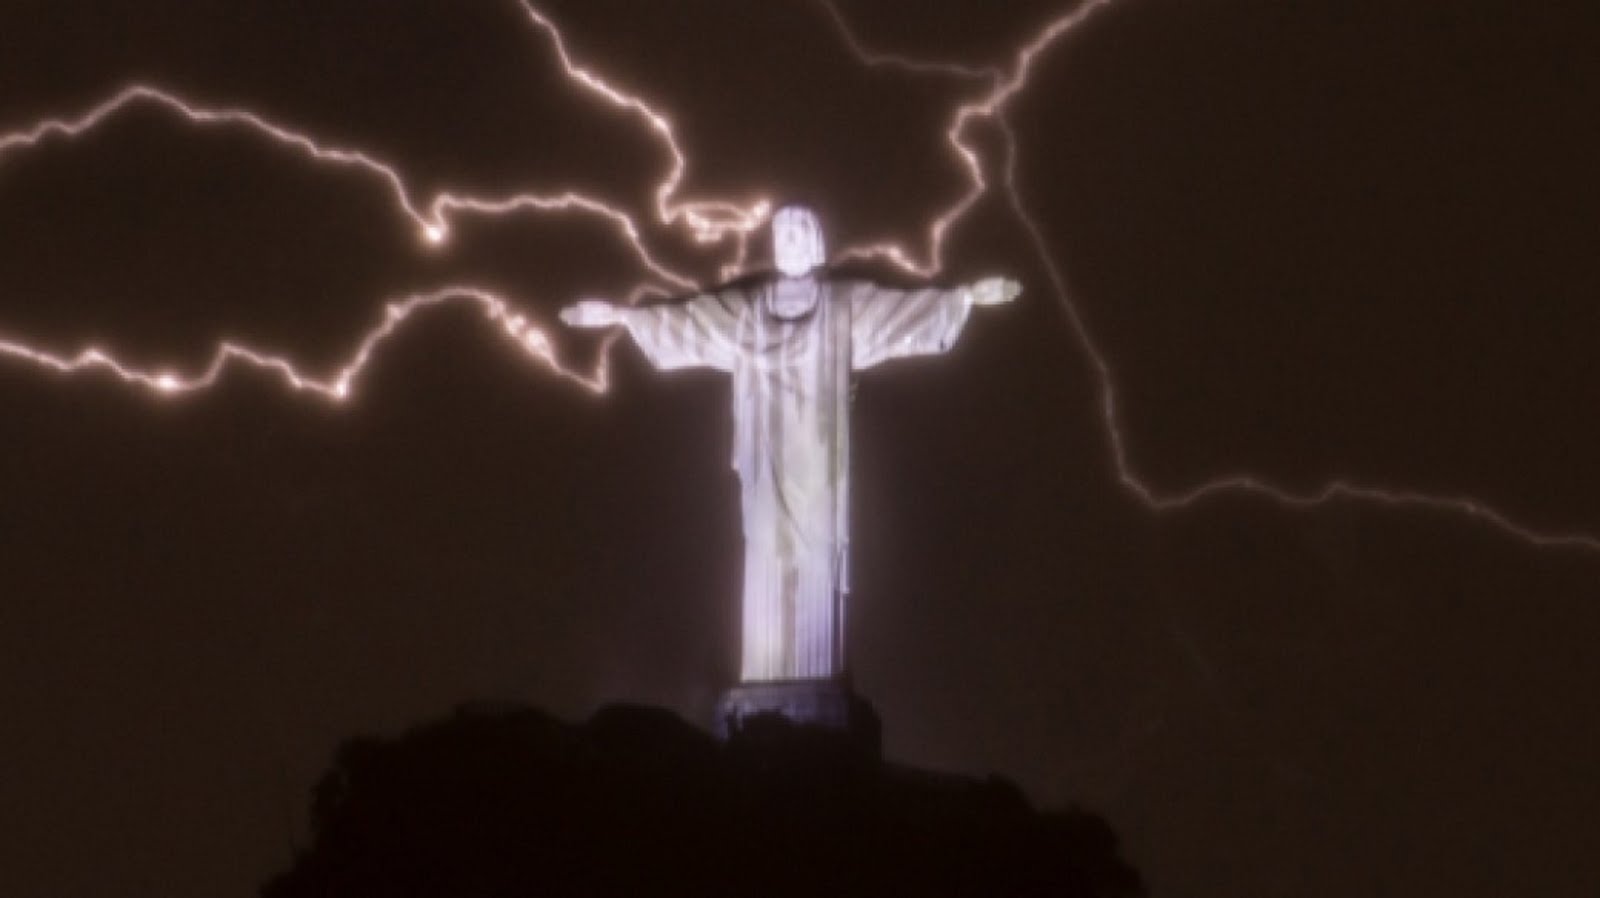 LIGHTENING STRIKES JESUS STATUE IN RIO DE JANEIRO